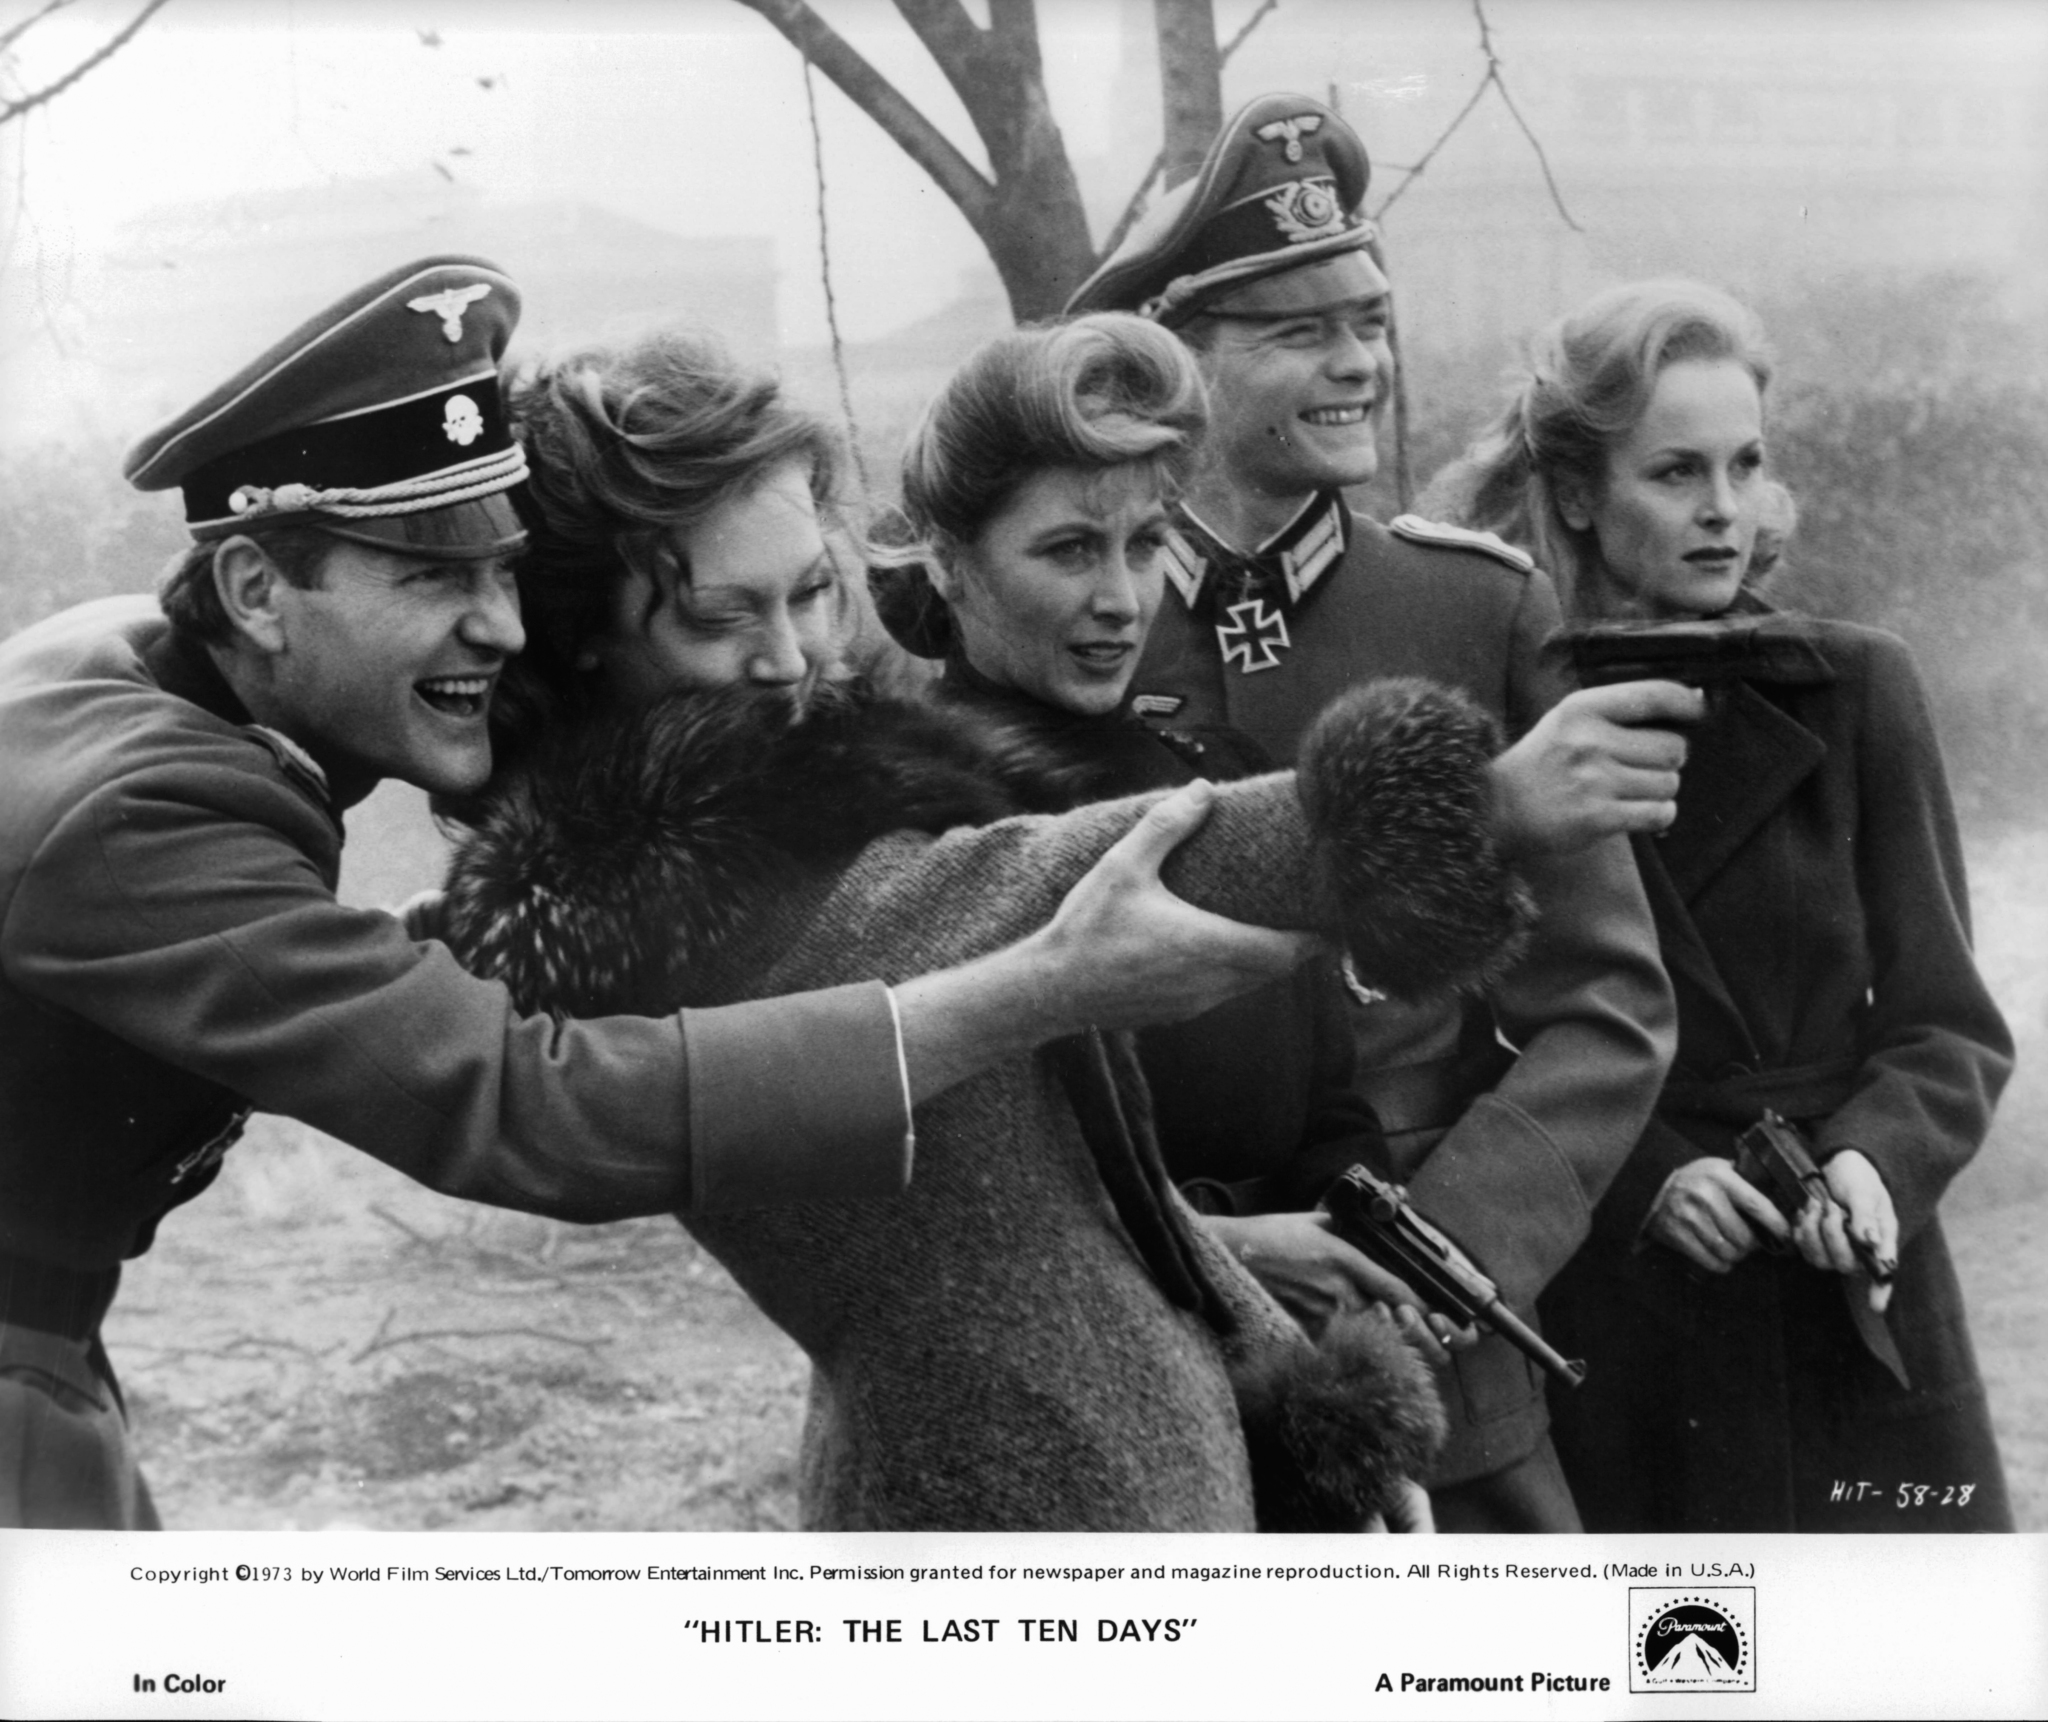 Julian Glover, Sheila Gish, Doris Kunstmann and Simon Ward at event of Hitler: The Last Ten Days (1973)